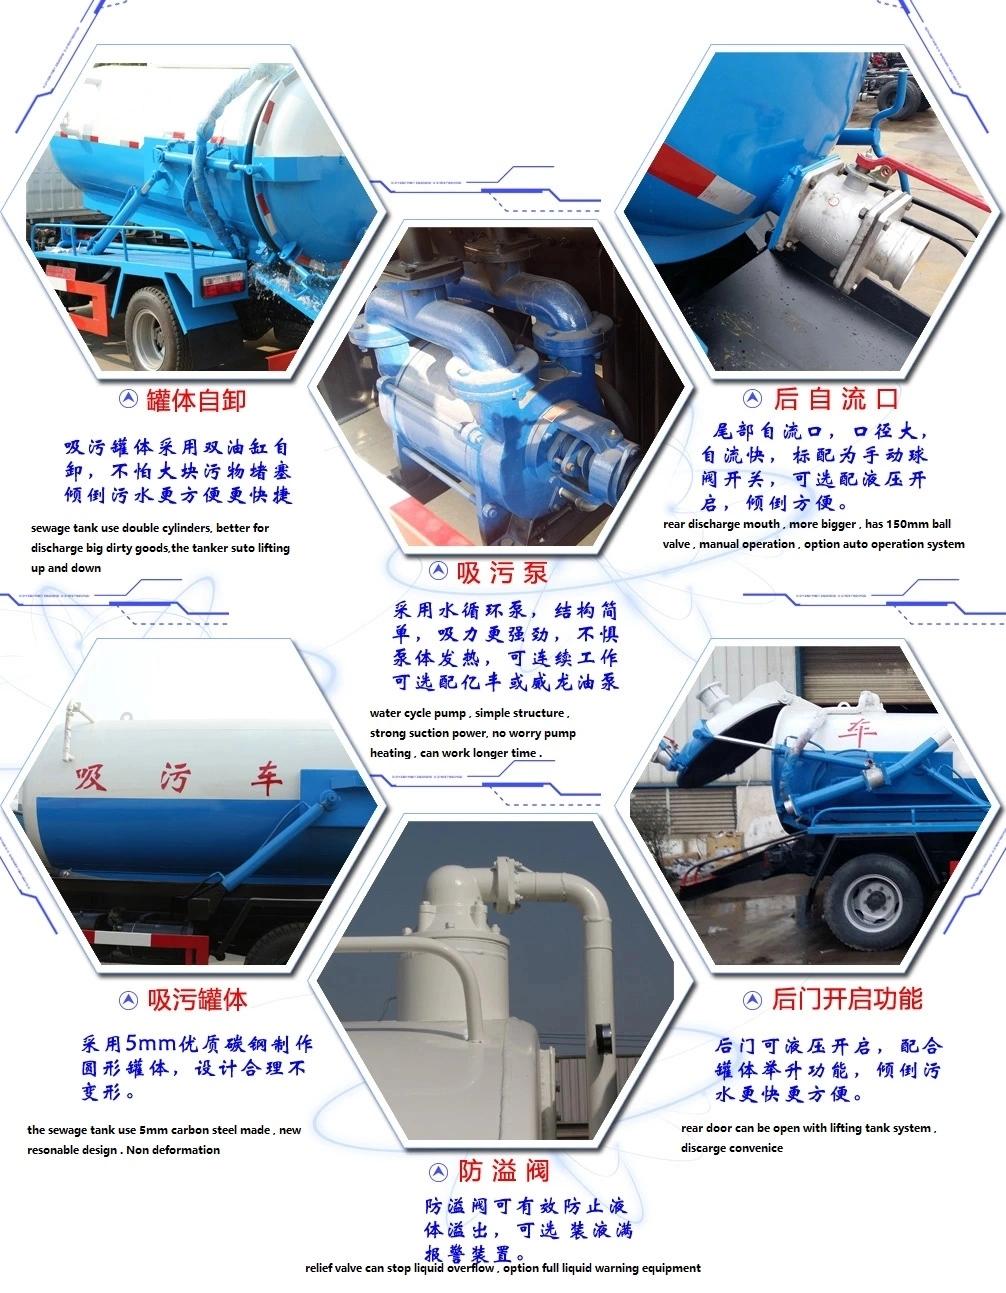 Shacman L3000 Fecal Sewage Vacuum Suction Vehicles Price